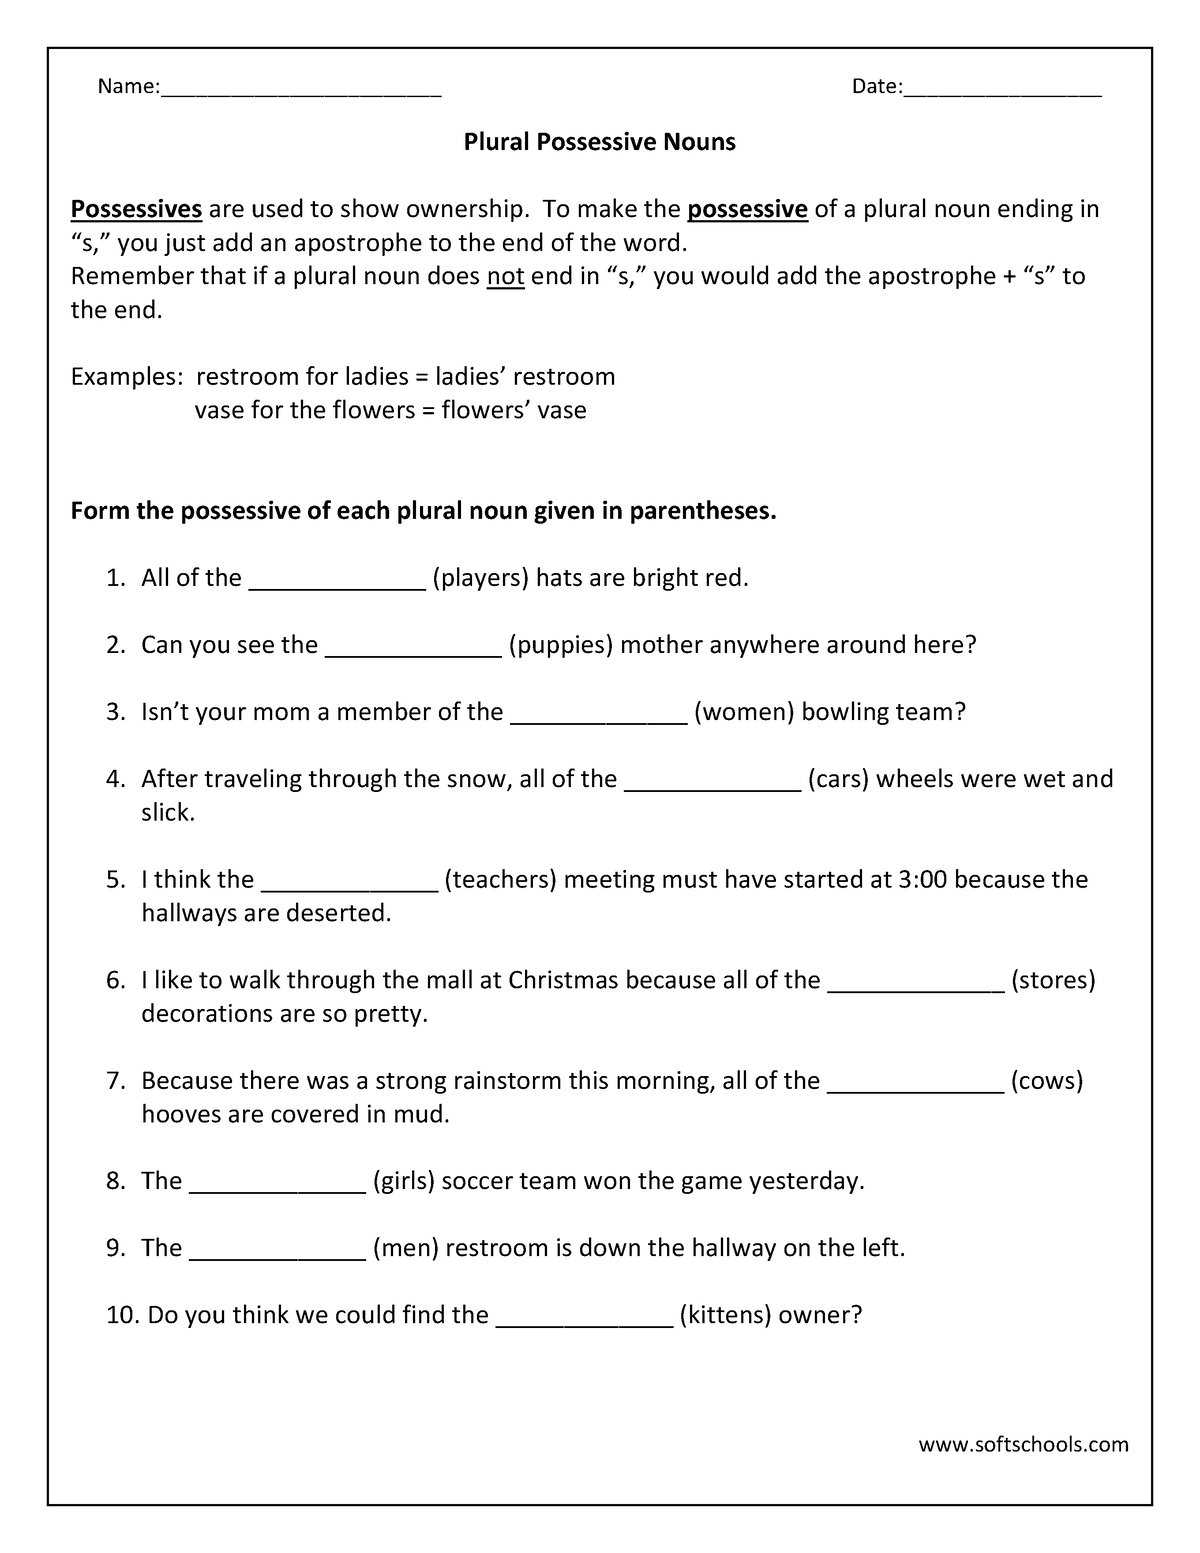 plural-possessive-nouns-6th-grade-worksheet-name-date